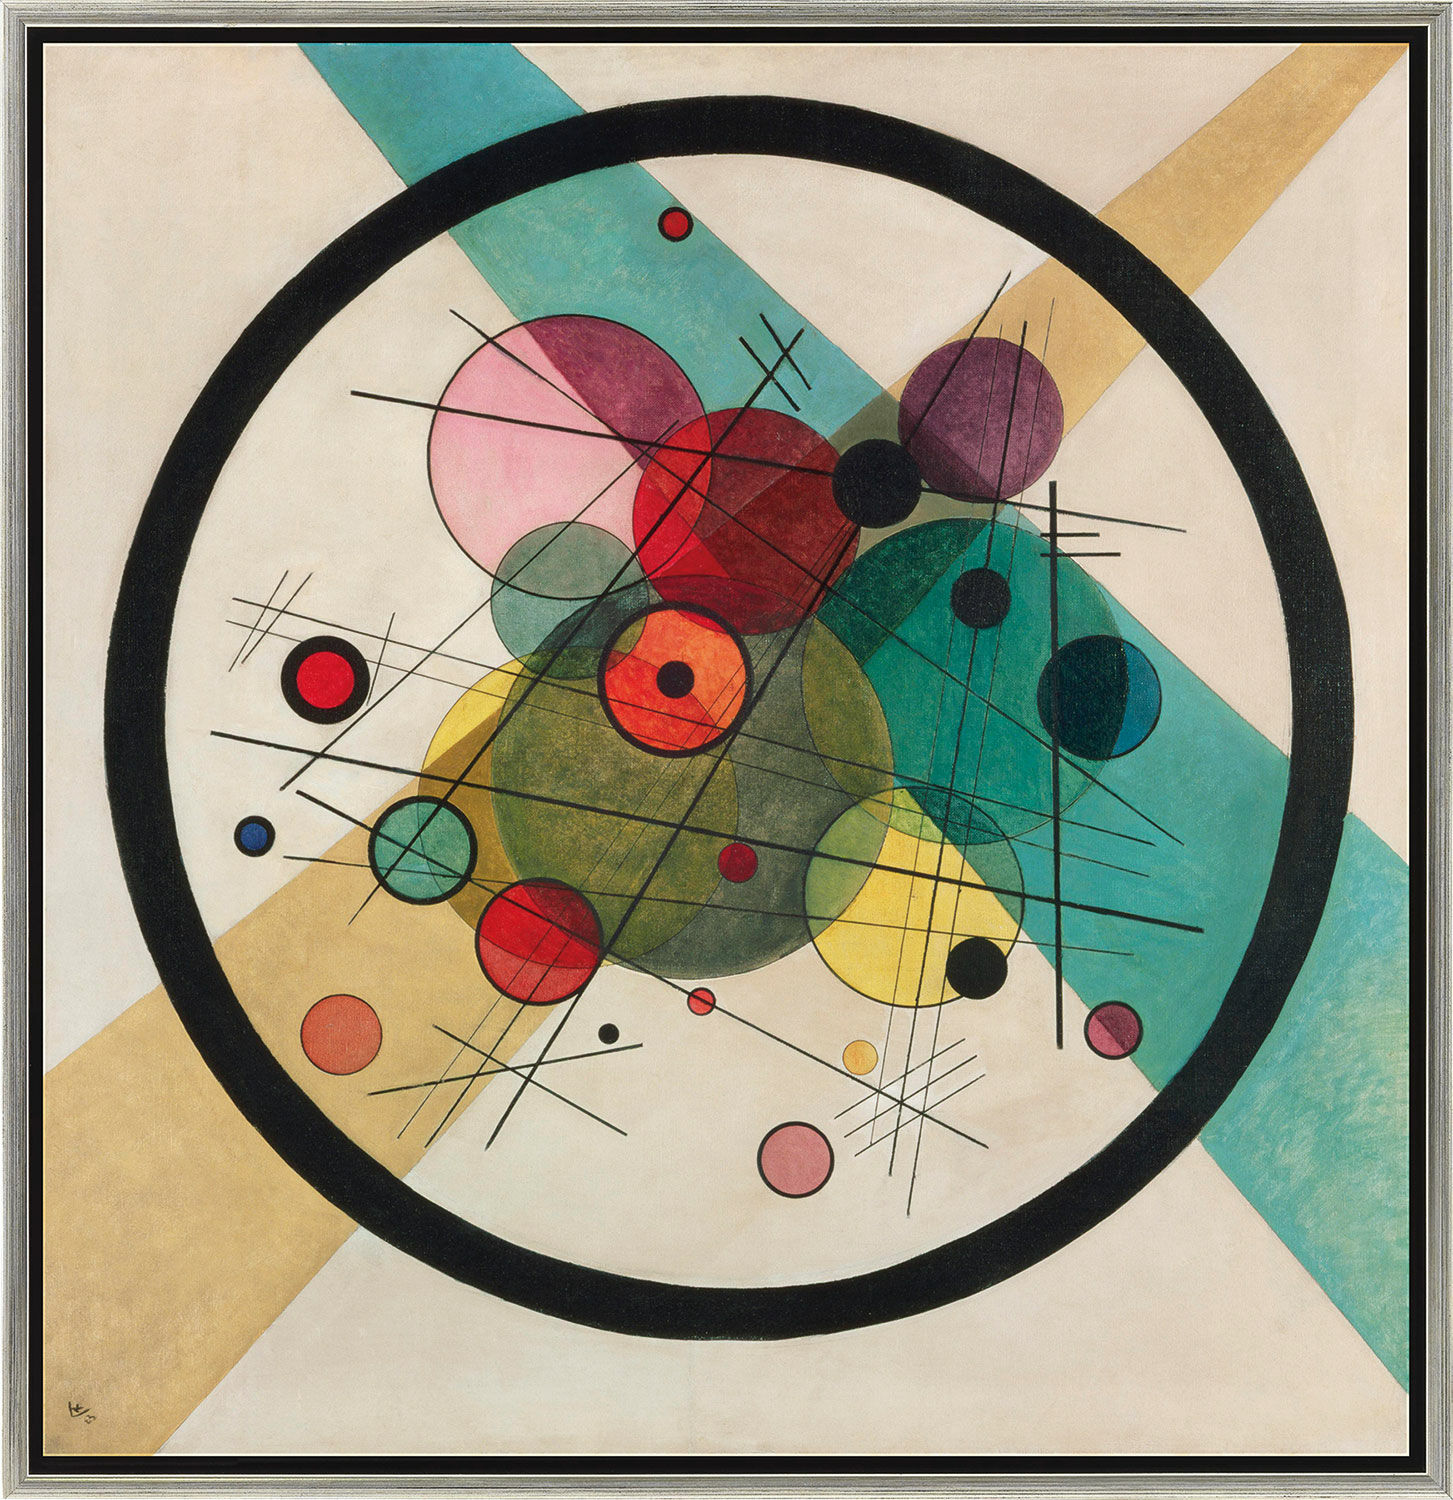 Billede "Cirkler i en cirkel" (1923), indrammet von Wassily Kandinsky